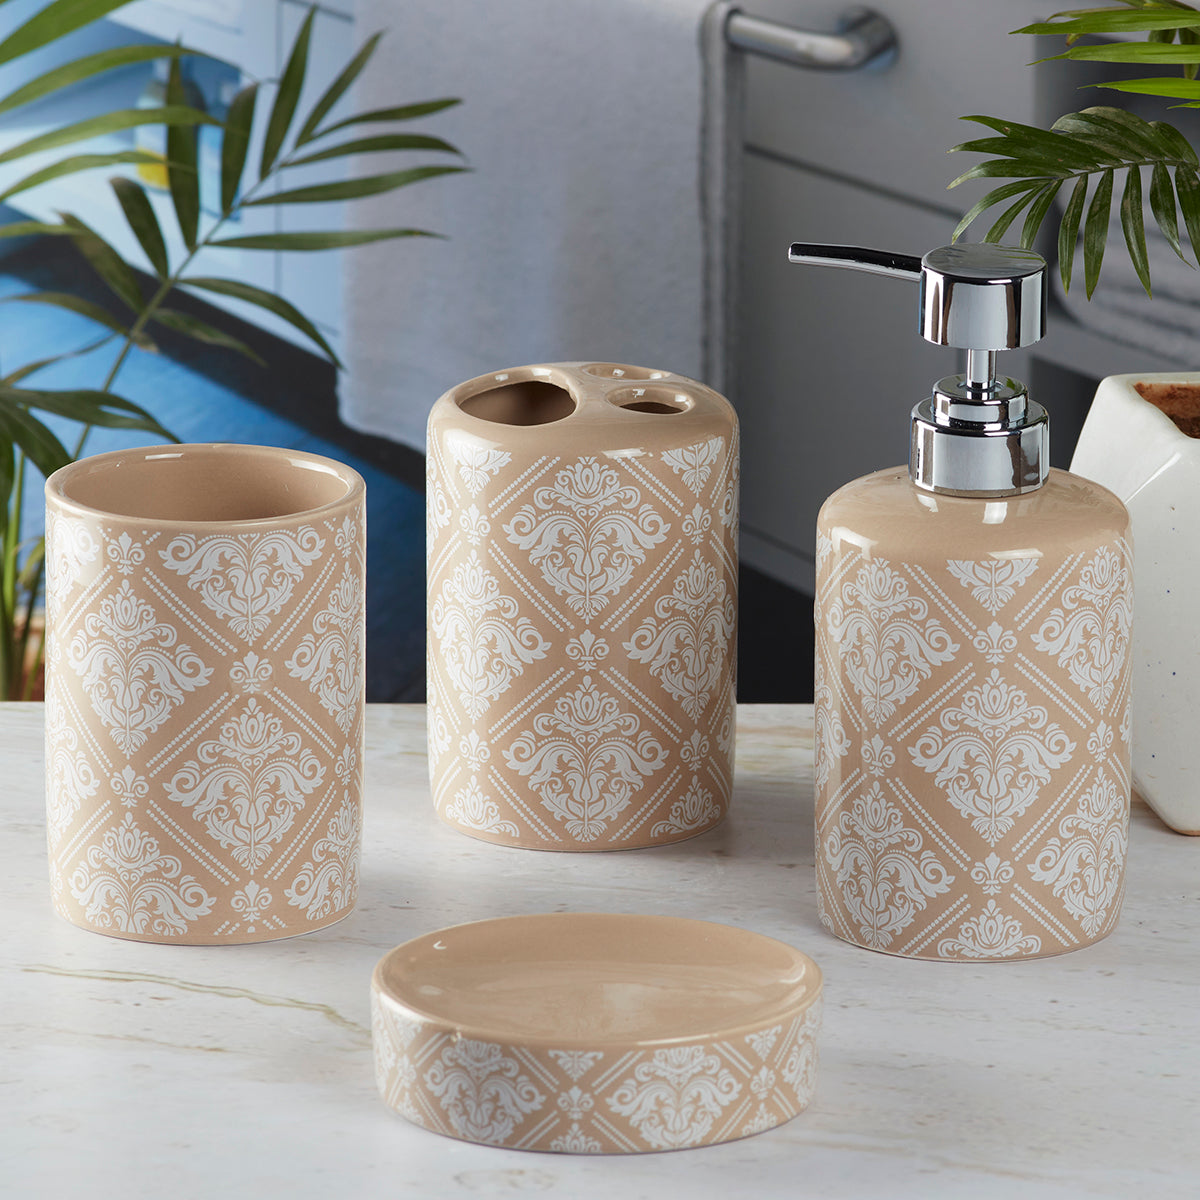 Ceramic Bathroom Accessories Set of 4 Bath Set with Soap Dispenser (9753)